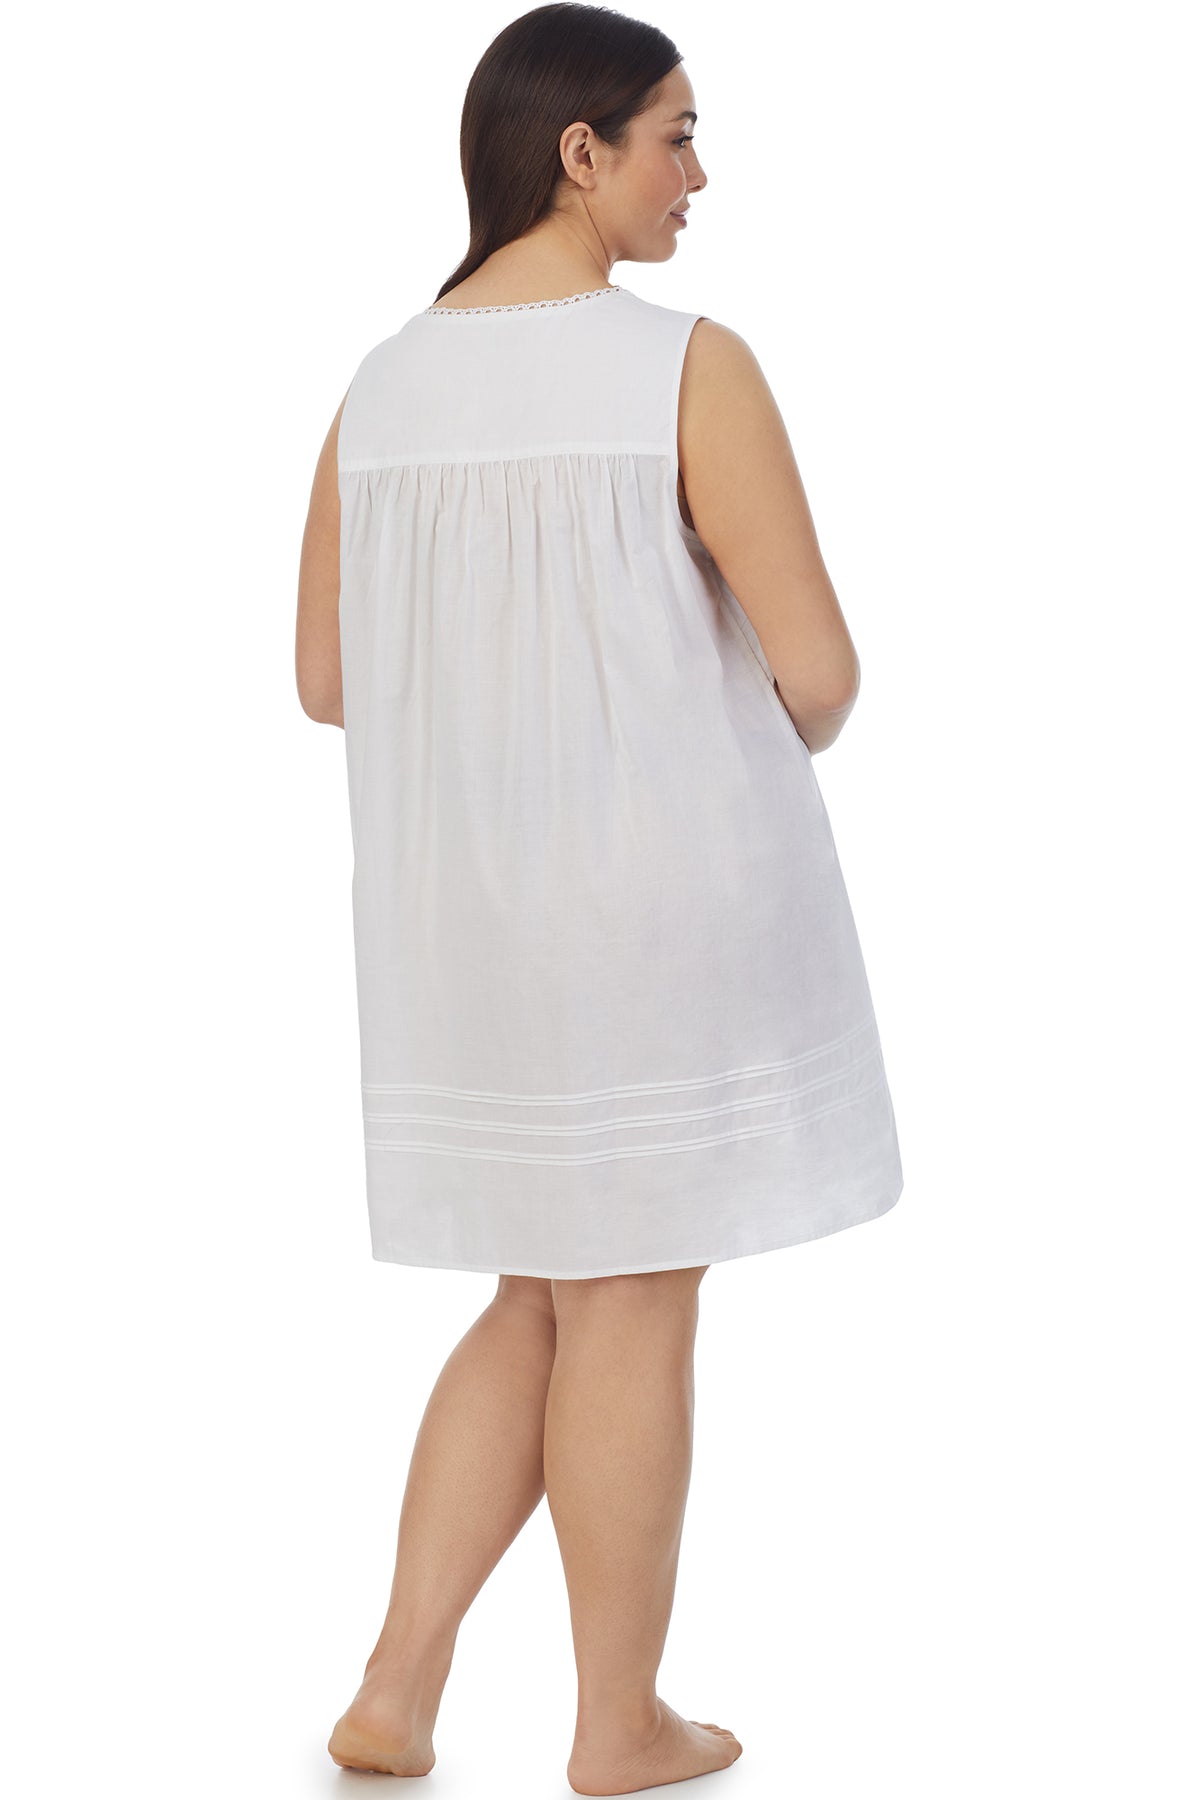 A lady wearing a white sleeveless short chemise.